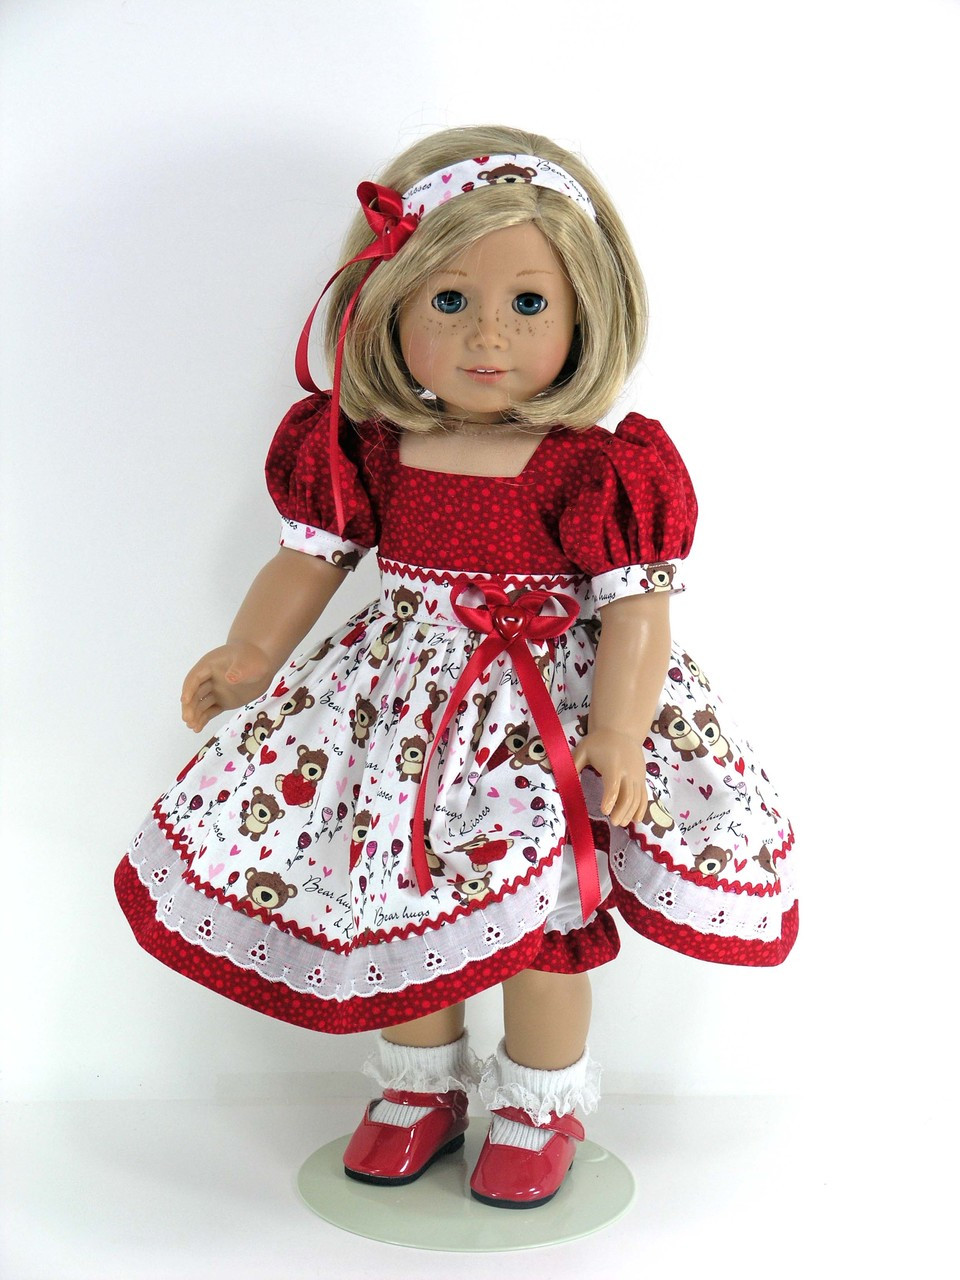 Handmade Doll Clothes for American Girl - Dress, Headband